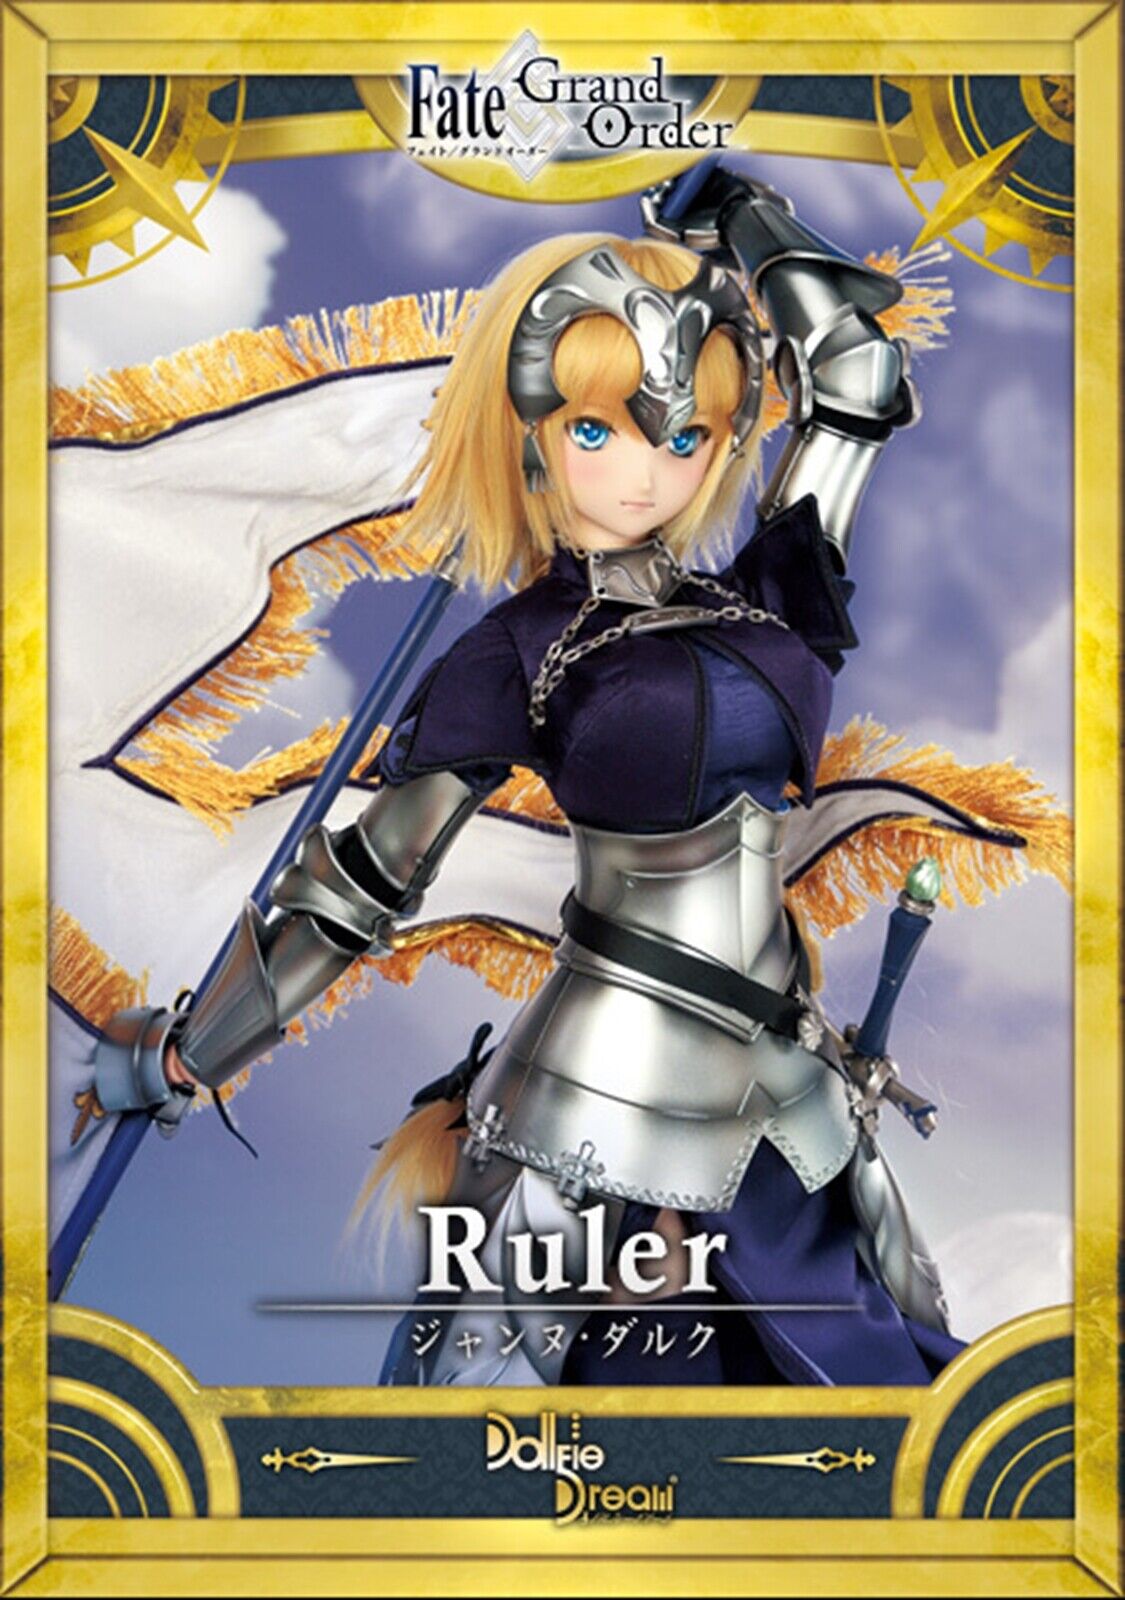 Fate Grand Order FGO DD Dollfie Dream Ruler Jeanne d'Arc doll figure VOLKS JAPAN